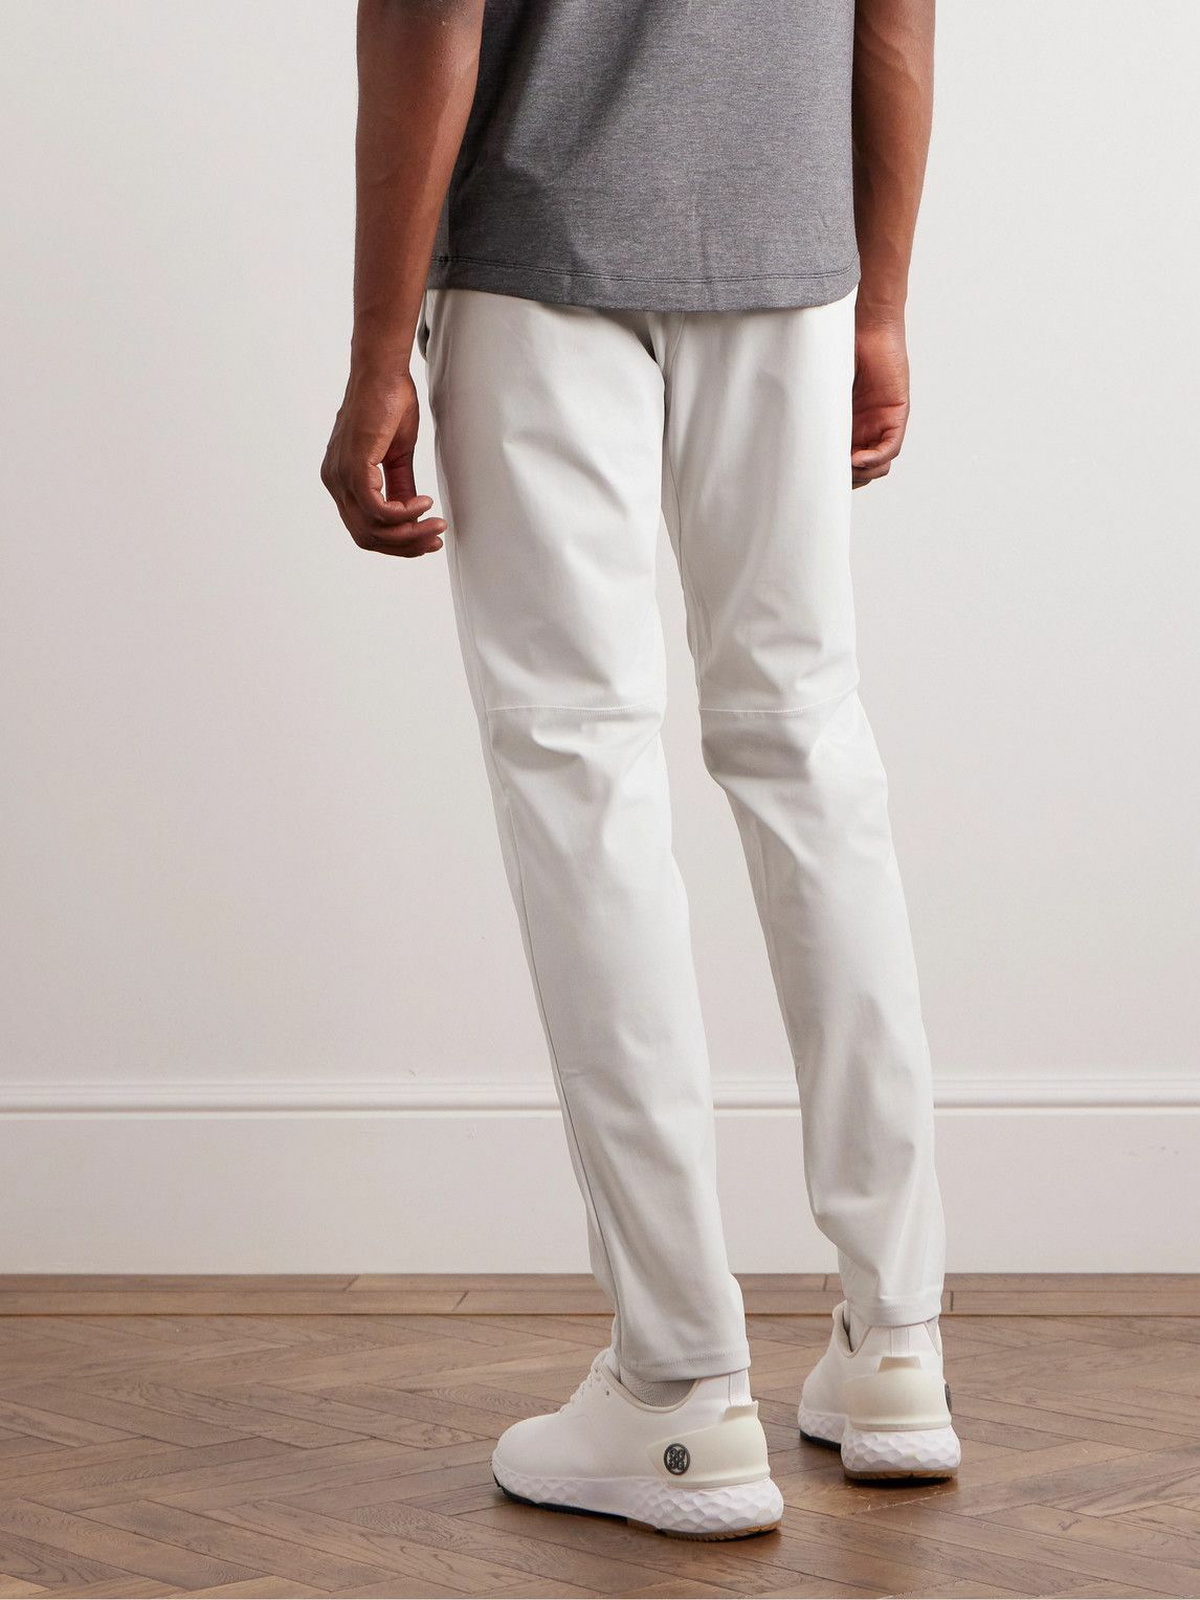 Men White Flame Print Pants Straight Casual Trousers Summer Skinny Denim  Jeans | eBay